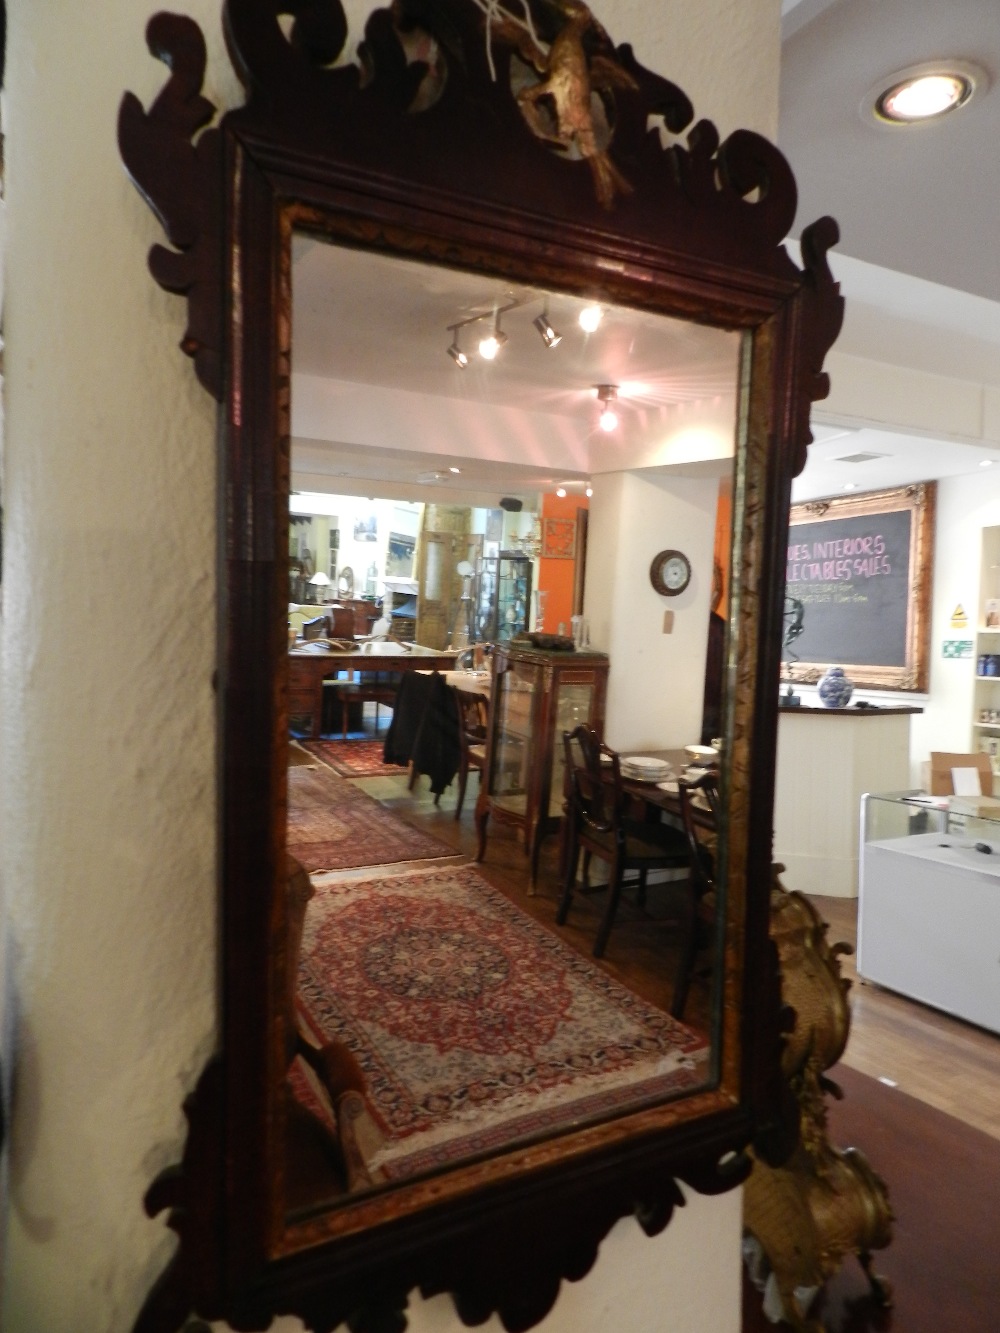 A George III style mahogany framed hall mirror having carved and pierced ho ho bird decoration.